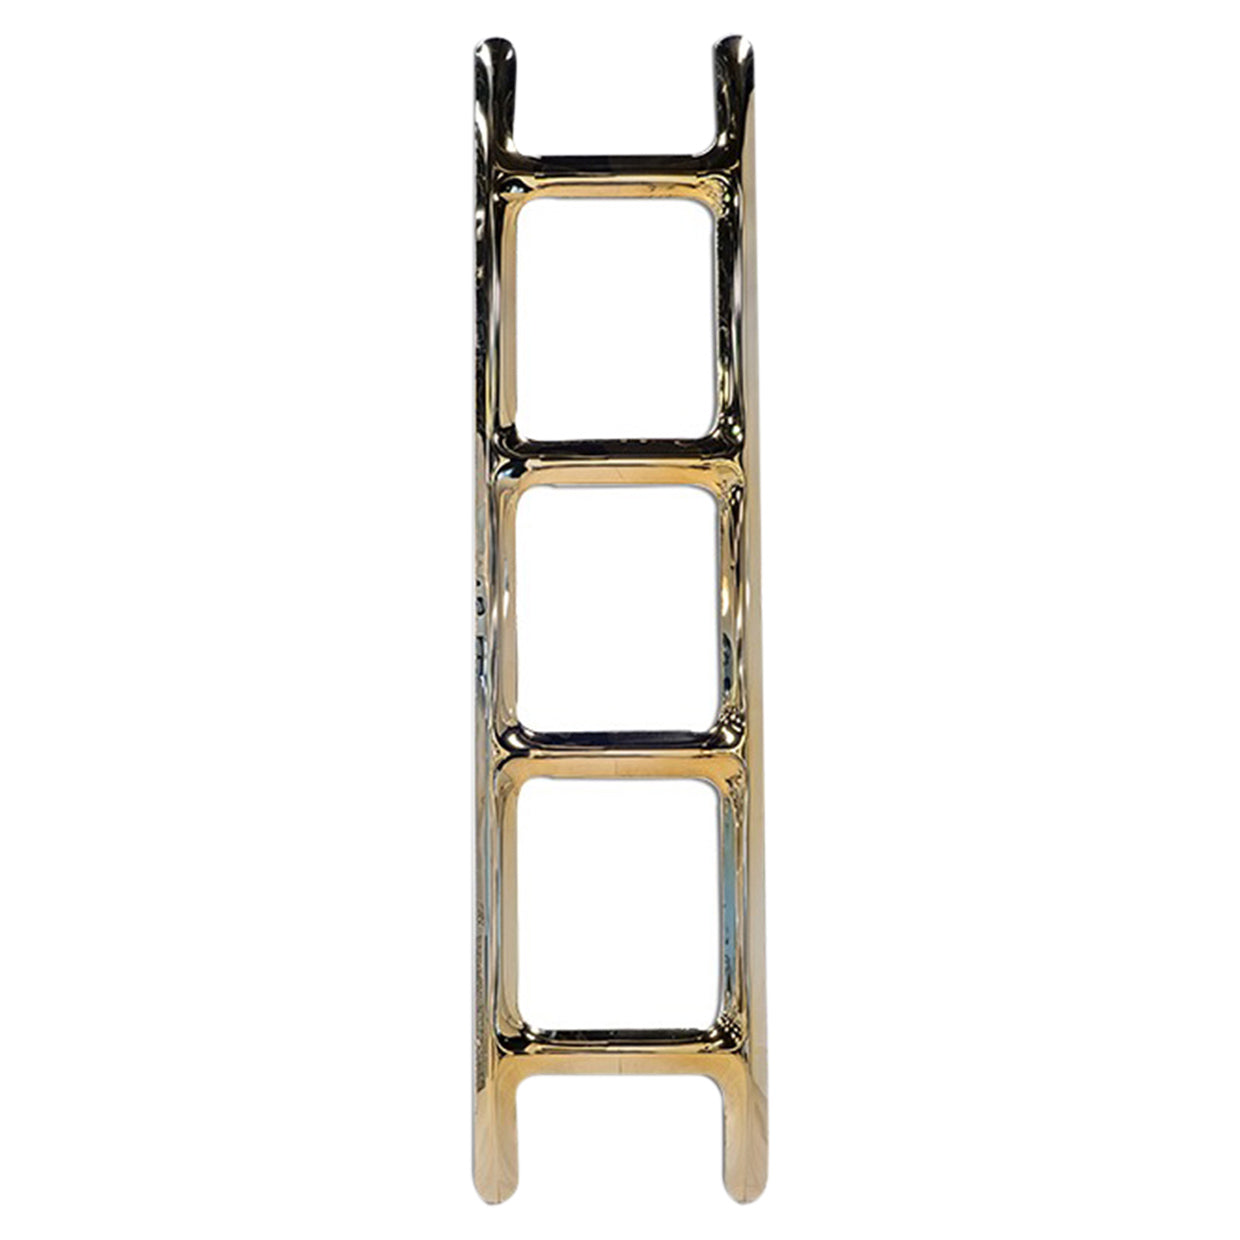 Drab Ladder Hanger: Flamed Gold + Stainless Steel